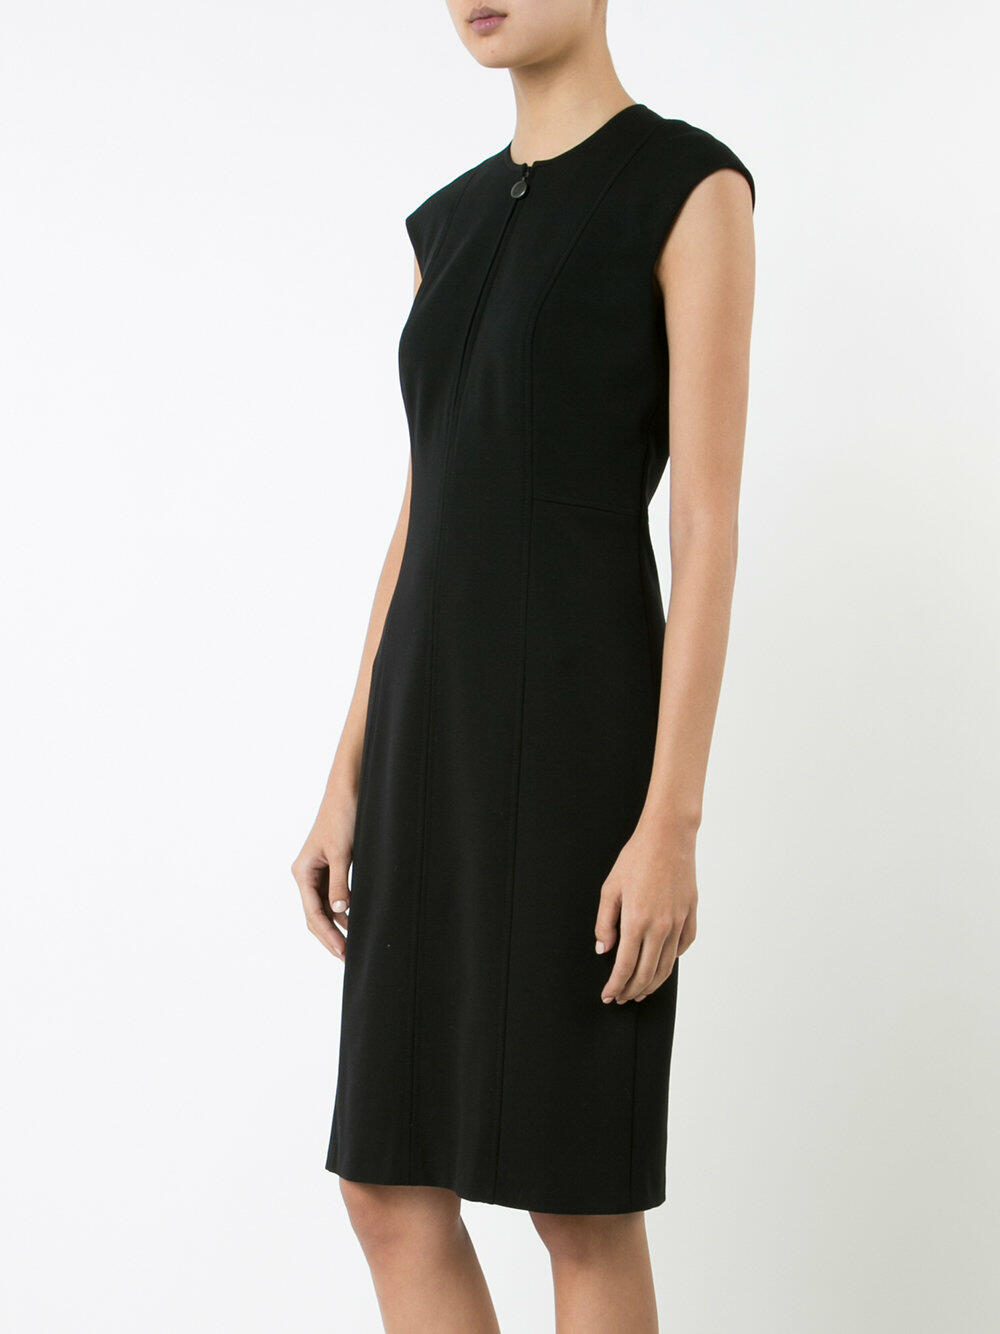 Akris Punto - Black Jersey Zip Front Cap Sleeve Dress